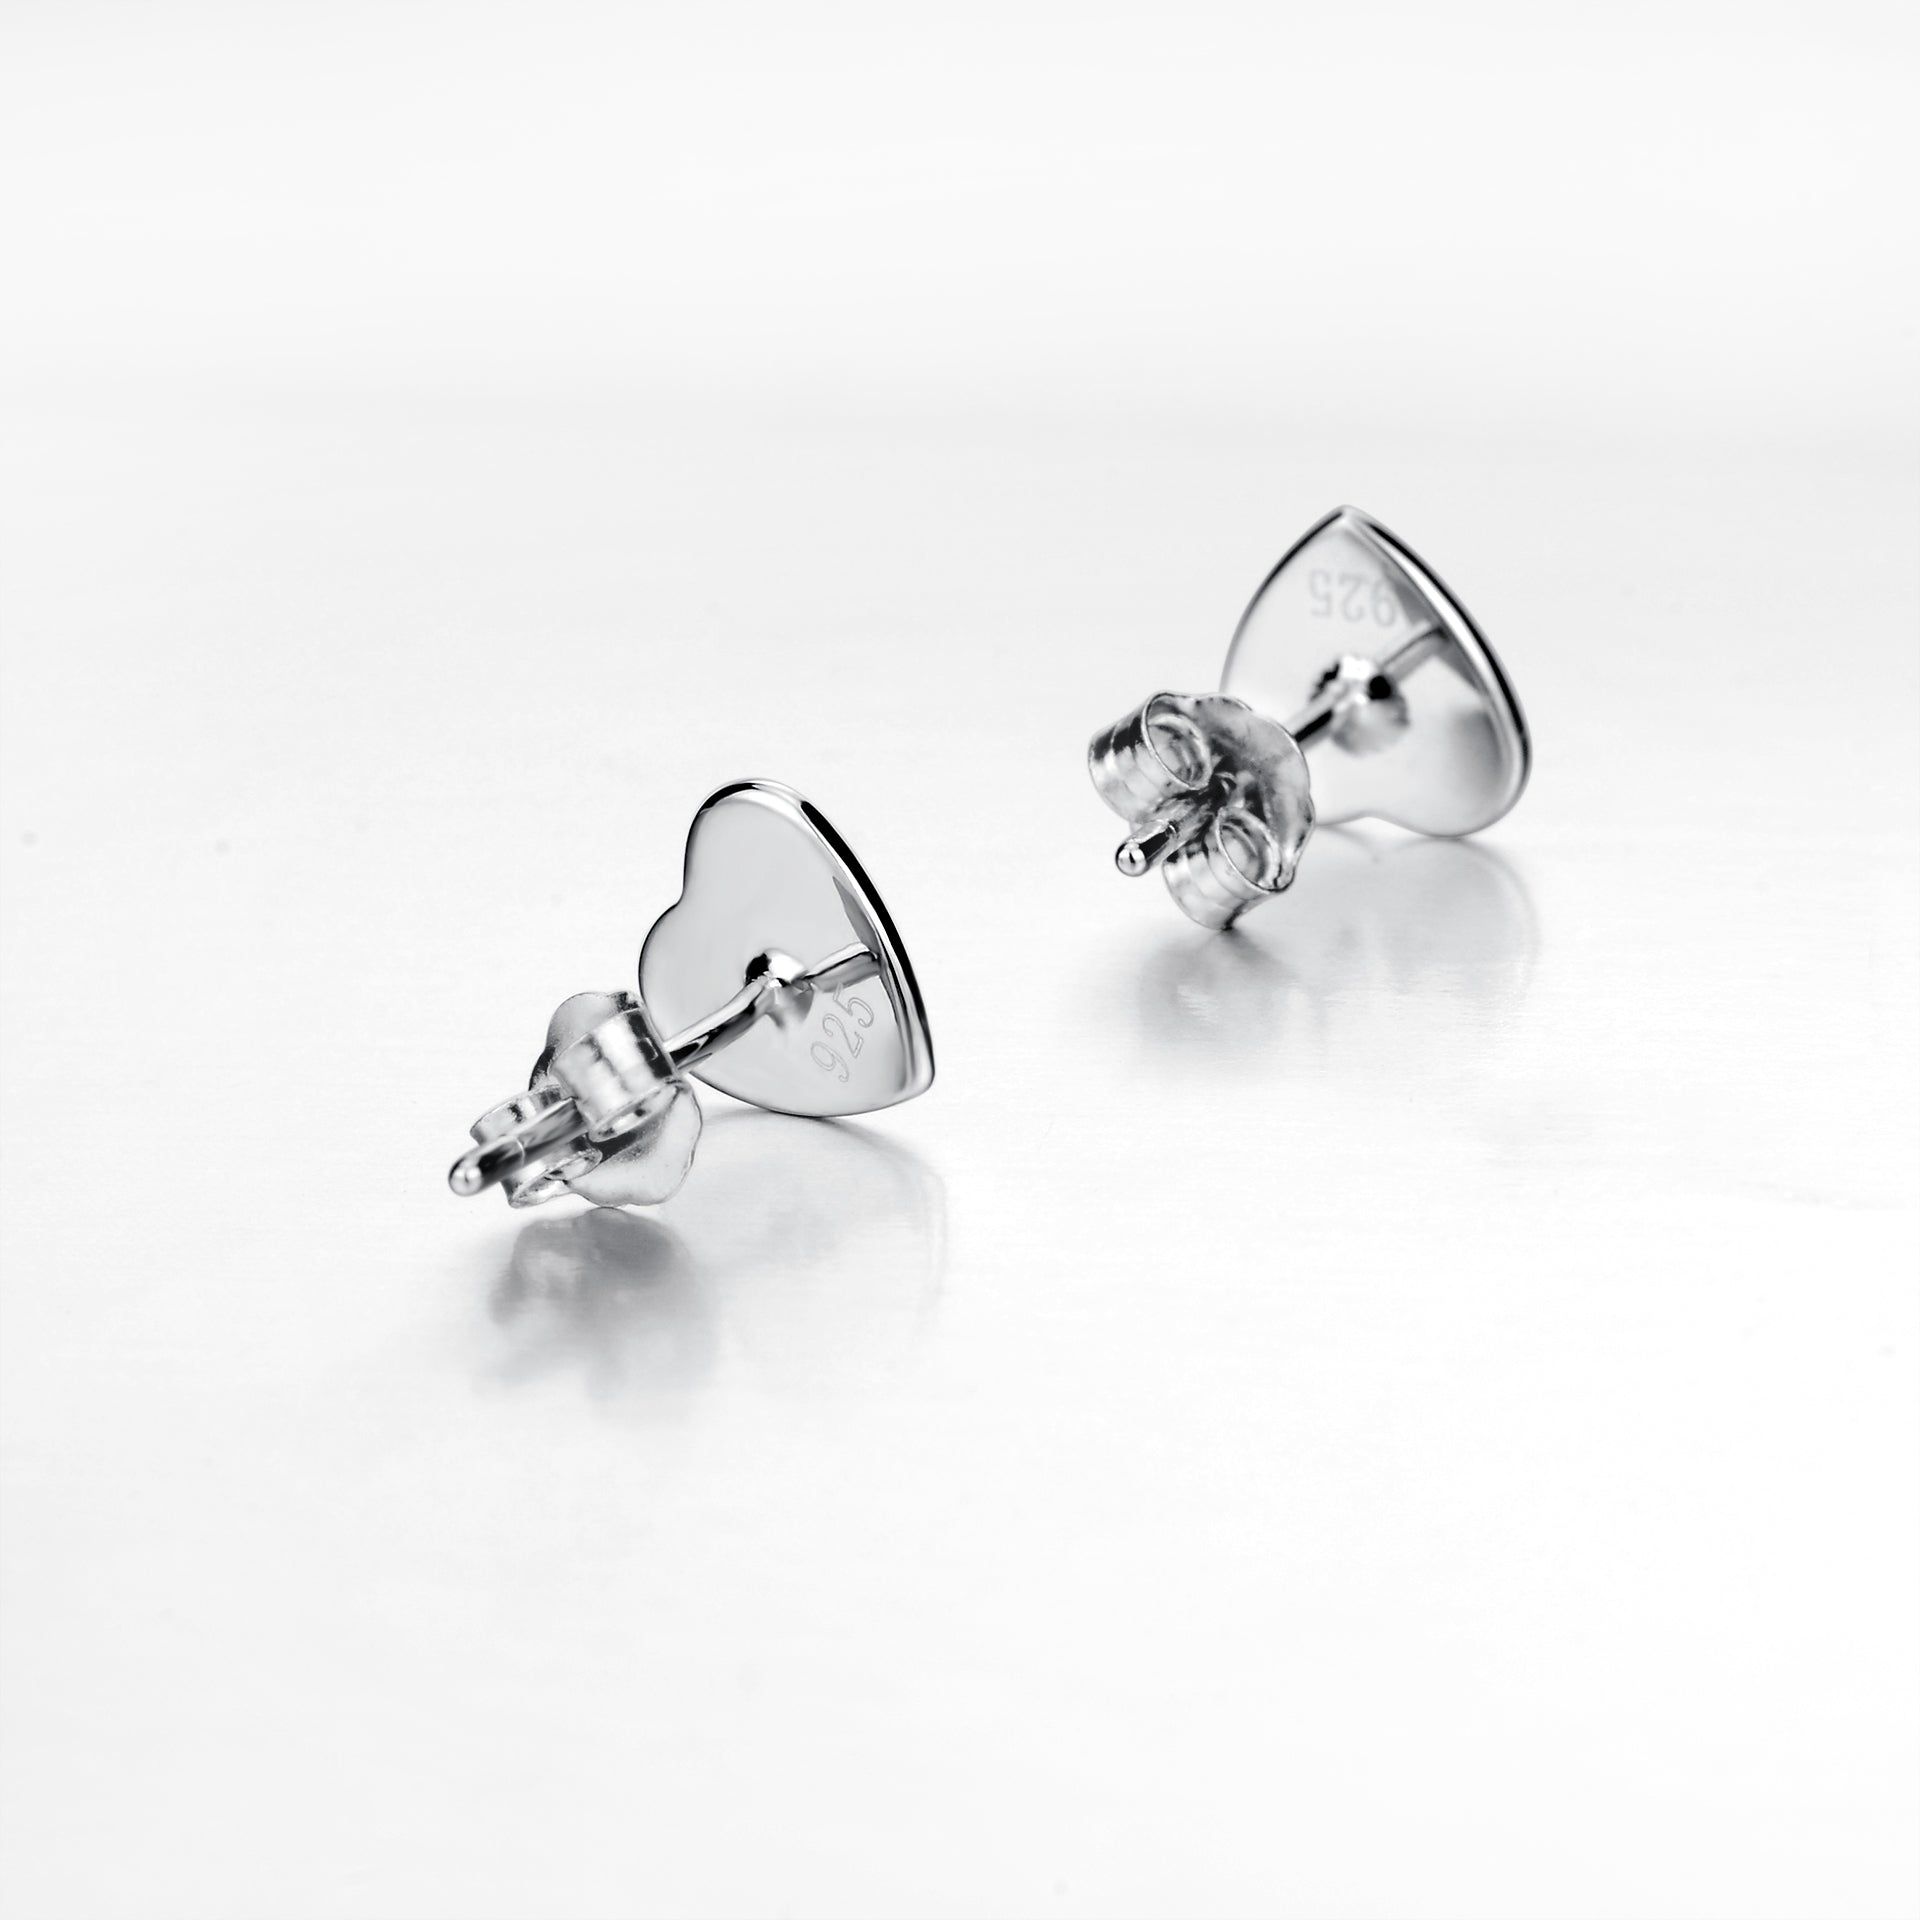 Rhodium Plating Heart Shape Earrings Mini Fashionable Design